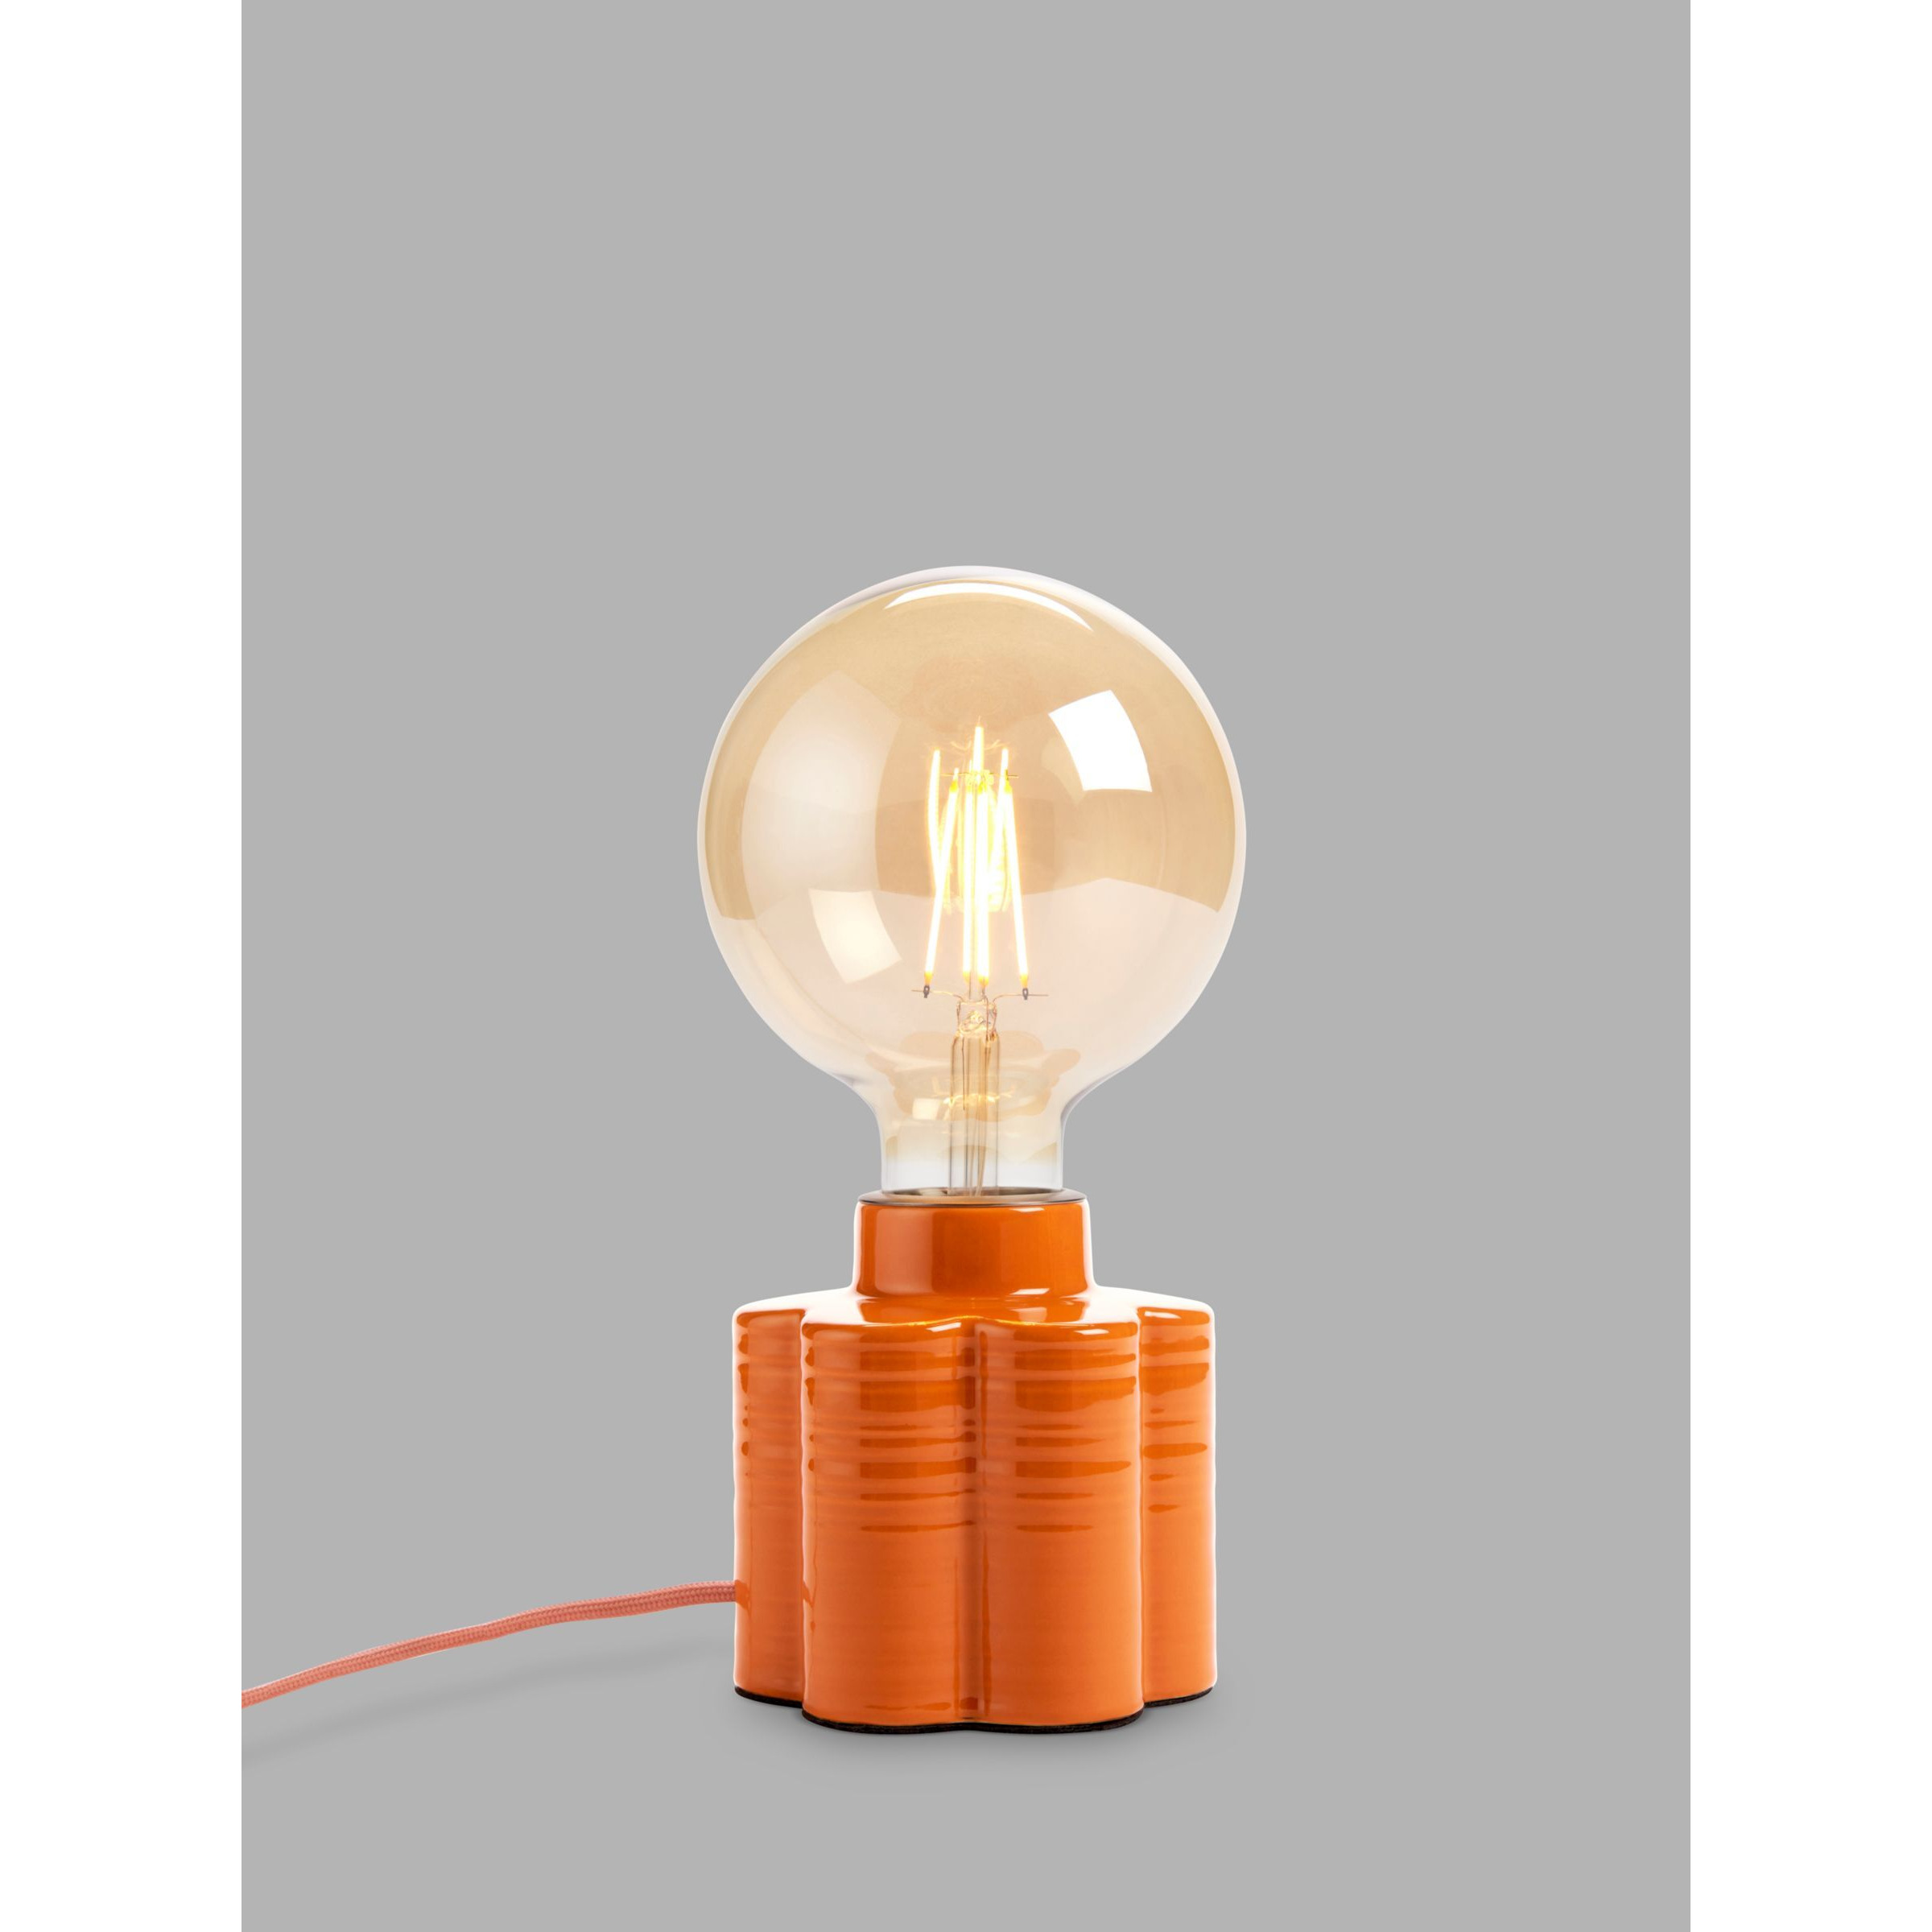 Orla Kiely Ceramic Bulbholder Table Lamp - image 1